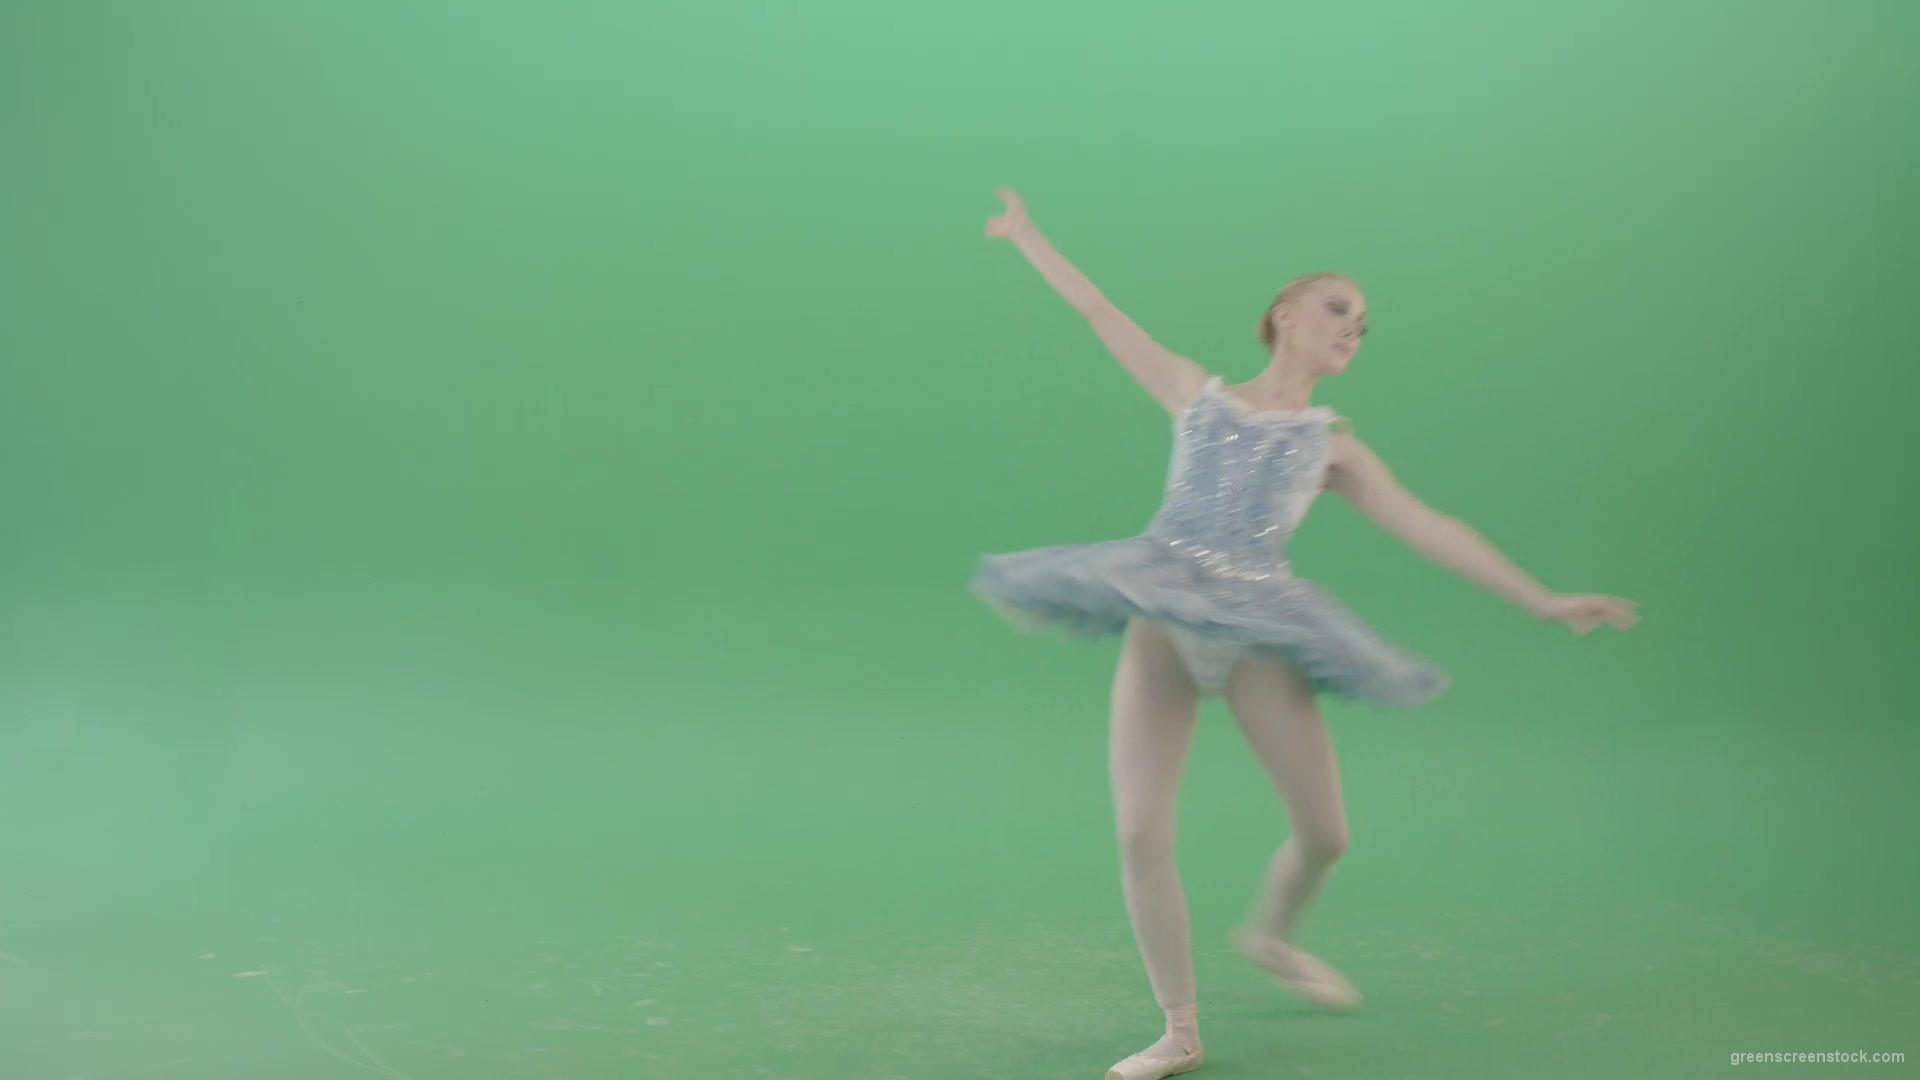 Happy-Ballerina-Ballet-Dancing-Girl-in-blue-dress-chilling-in-spin-on-green-screen-4K-Video-Footage-1920_002 Green Screen Stock